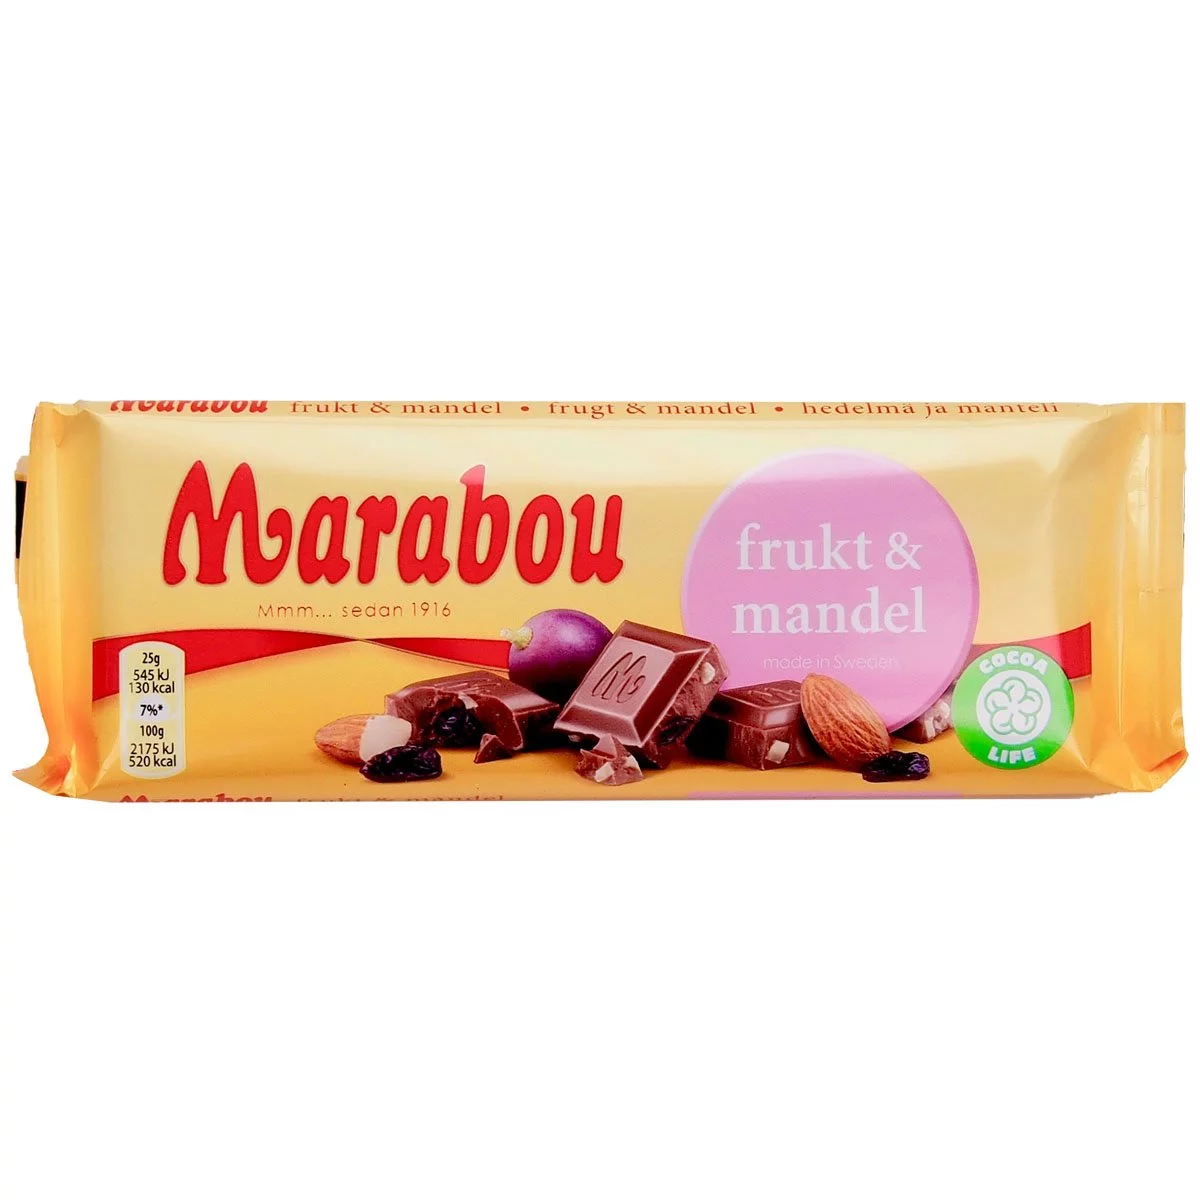 Marabou frukt & mandel (100g) *SONDERPREIS wegen abgelaufener Haltbarkeit* 1